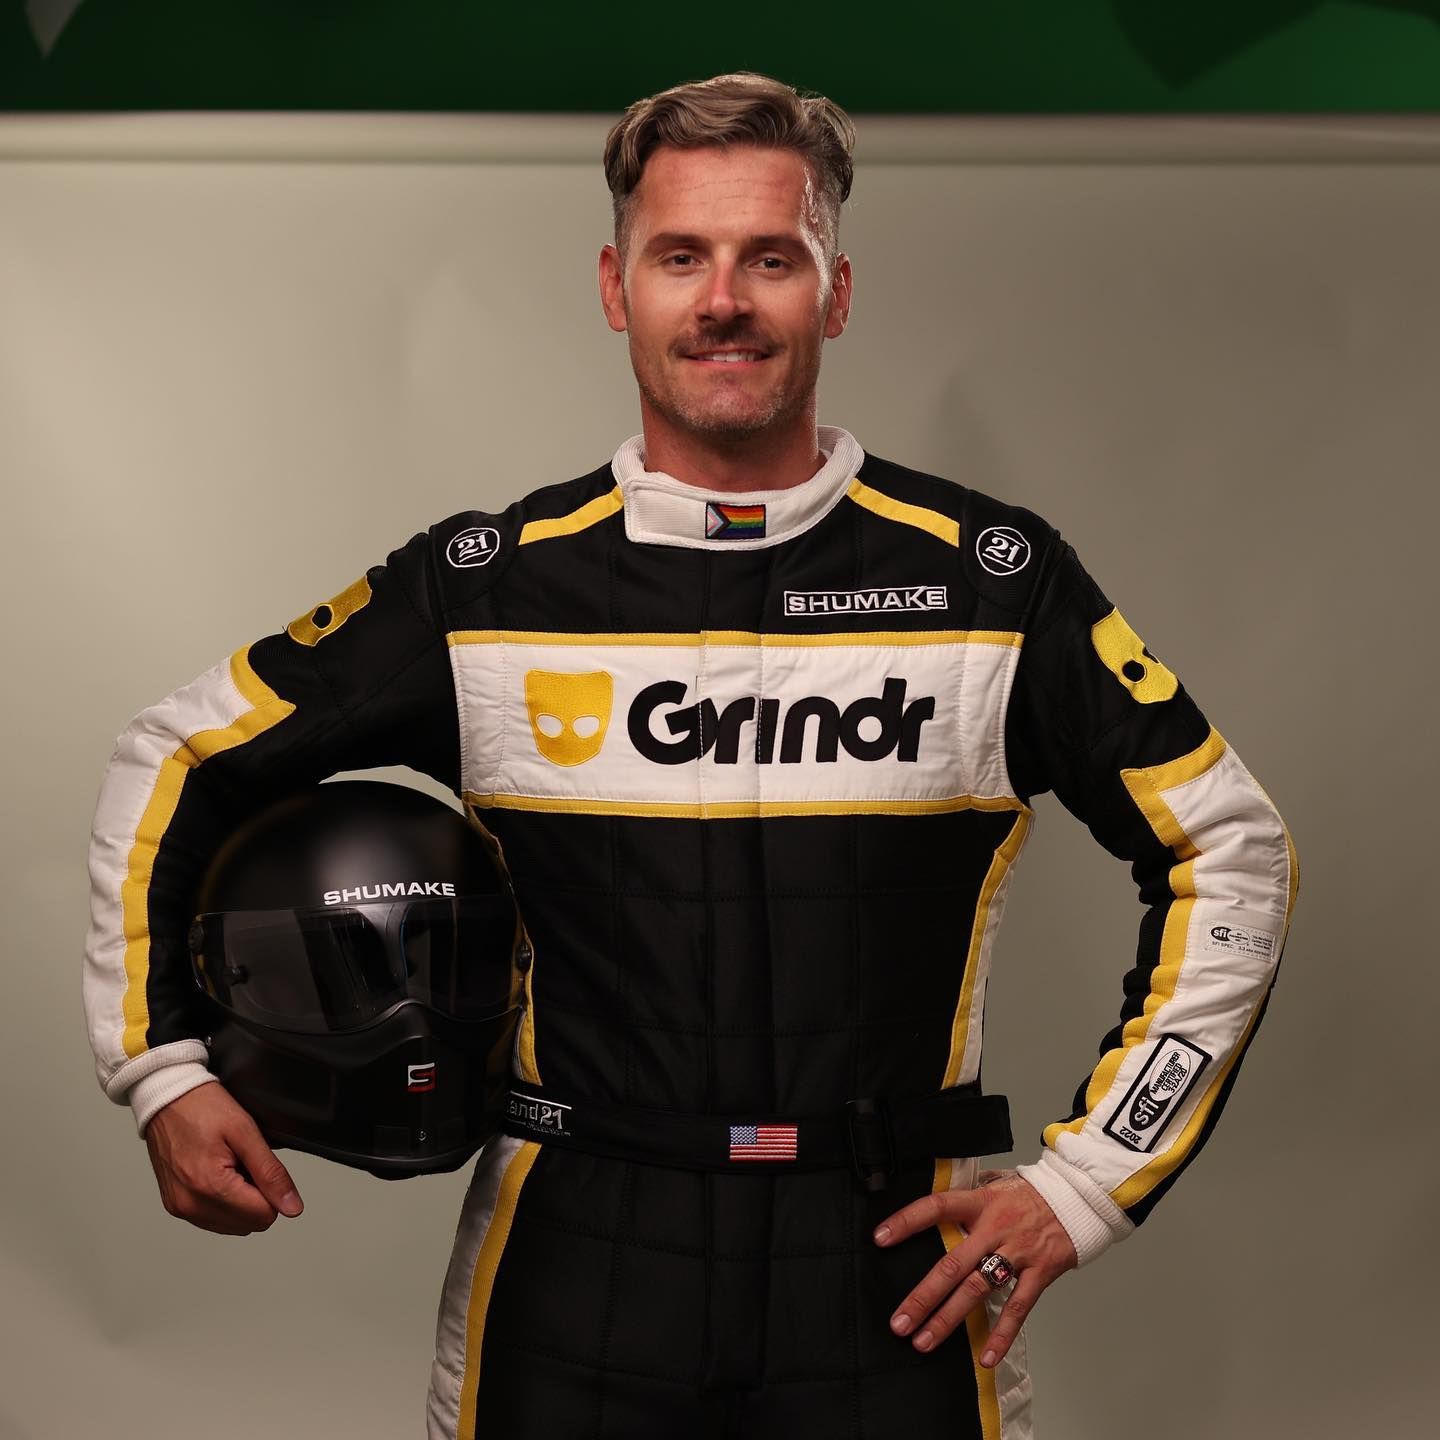 Grindr Announces Sponsorship of Gay NHRA Drag Racer